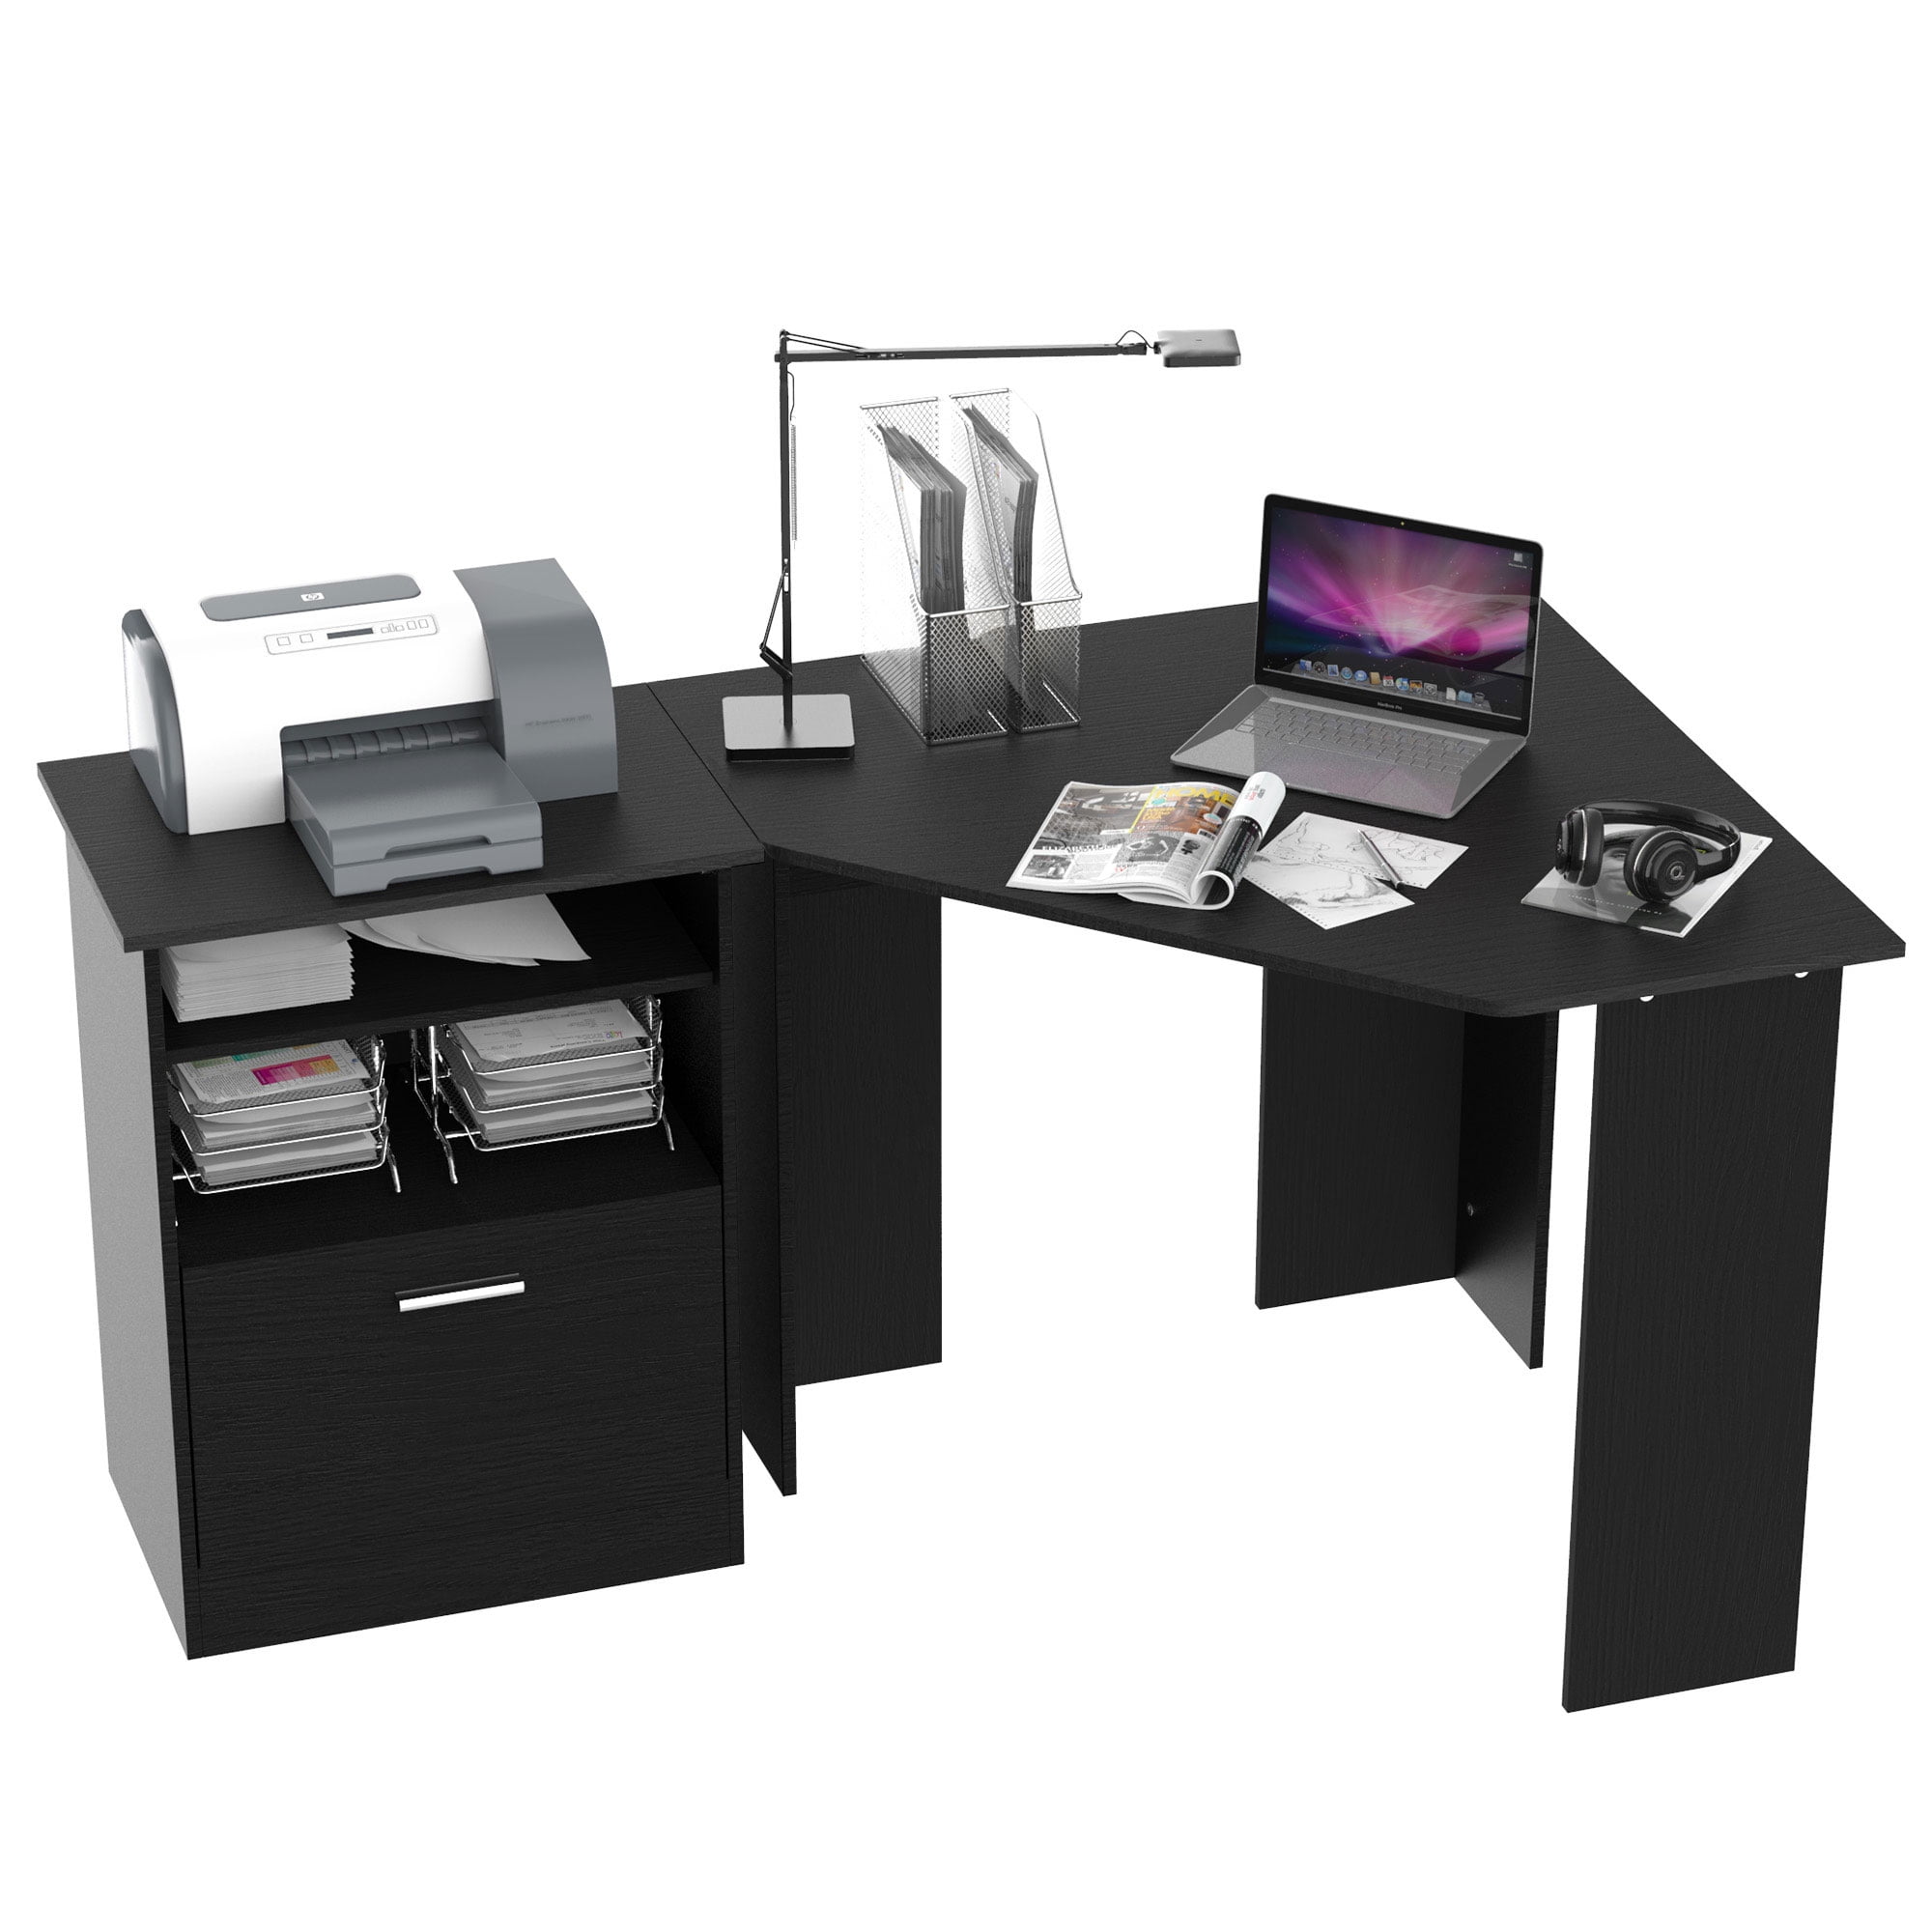 Homcom Computer Desk With Printer, L Shaped Office Desk With Printer Storage